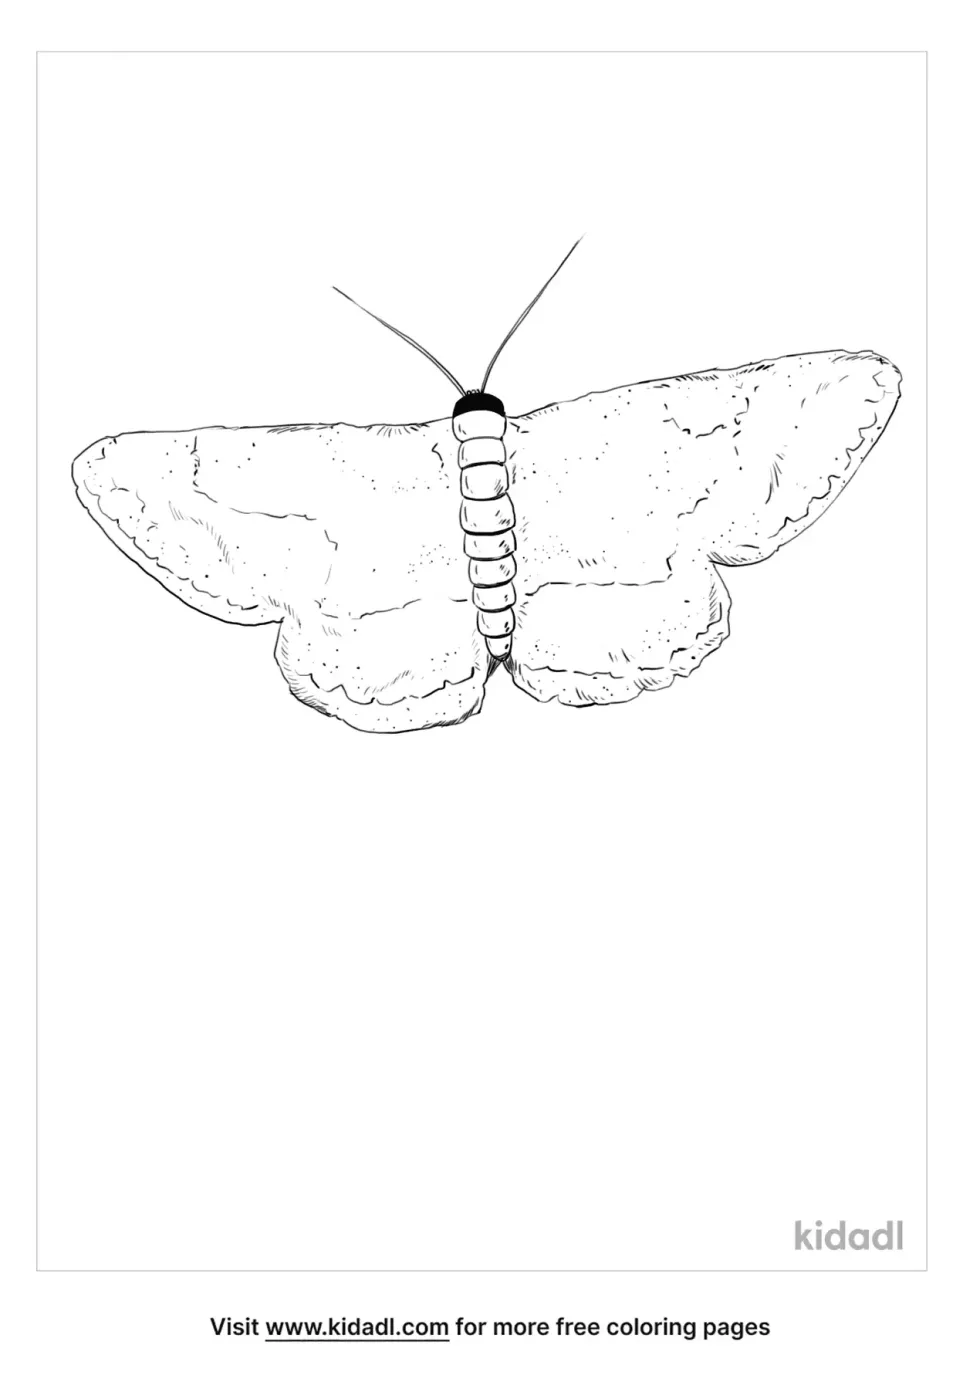 Common Gray Moth